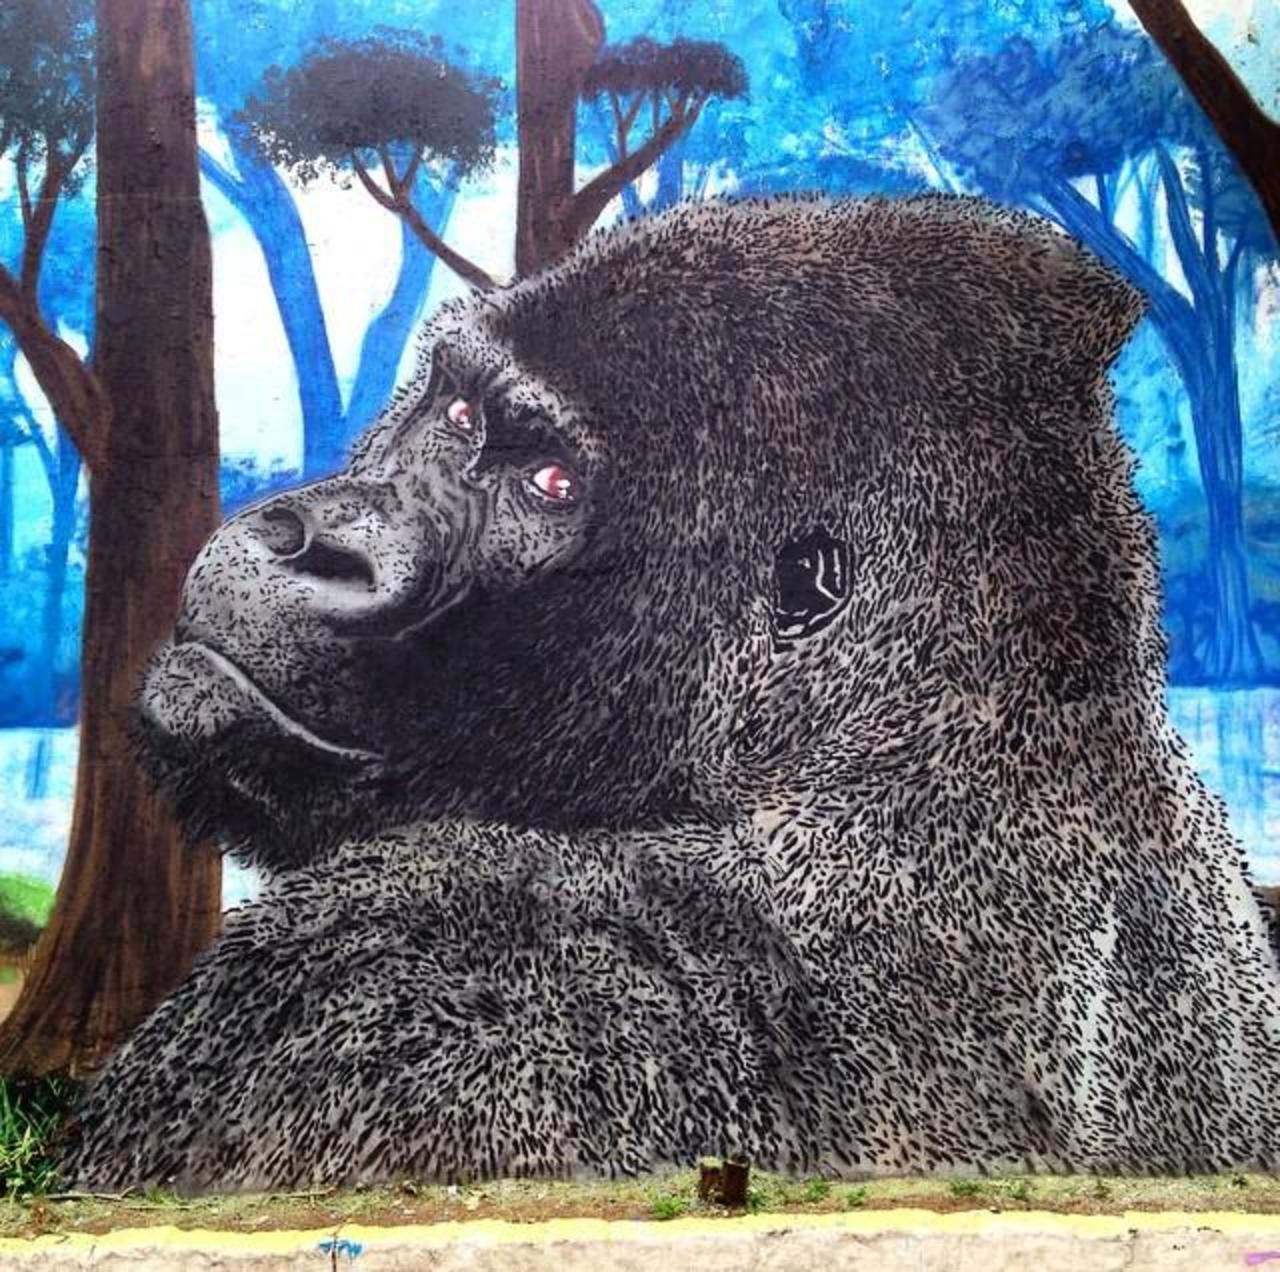 Superb Nature in Street Art piece by Thassio in São Paulo, Brazil  

#art #mural #graffiti #streetart http://t.co/ZsxzqgrLQv